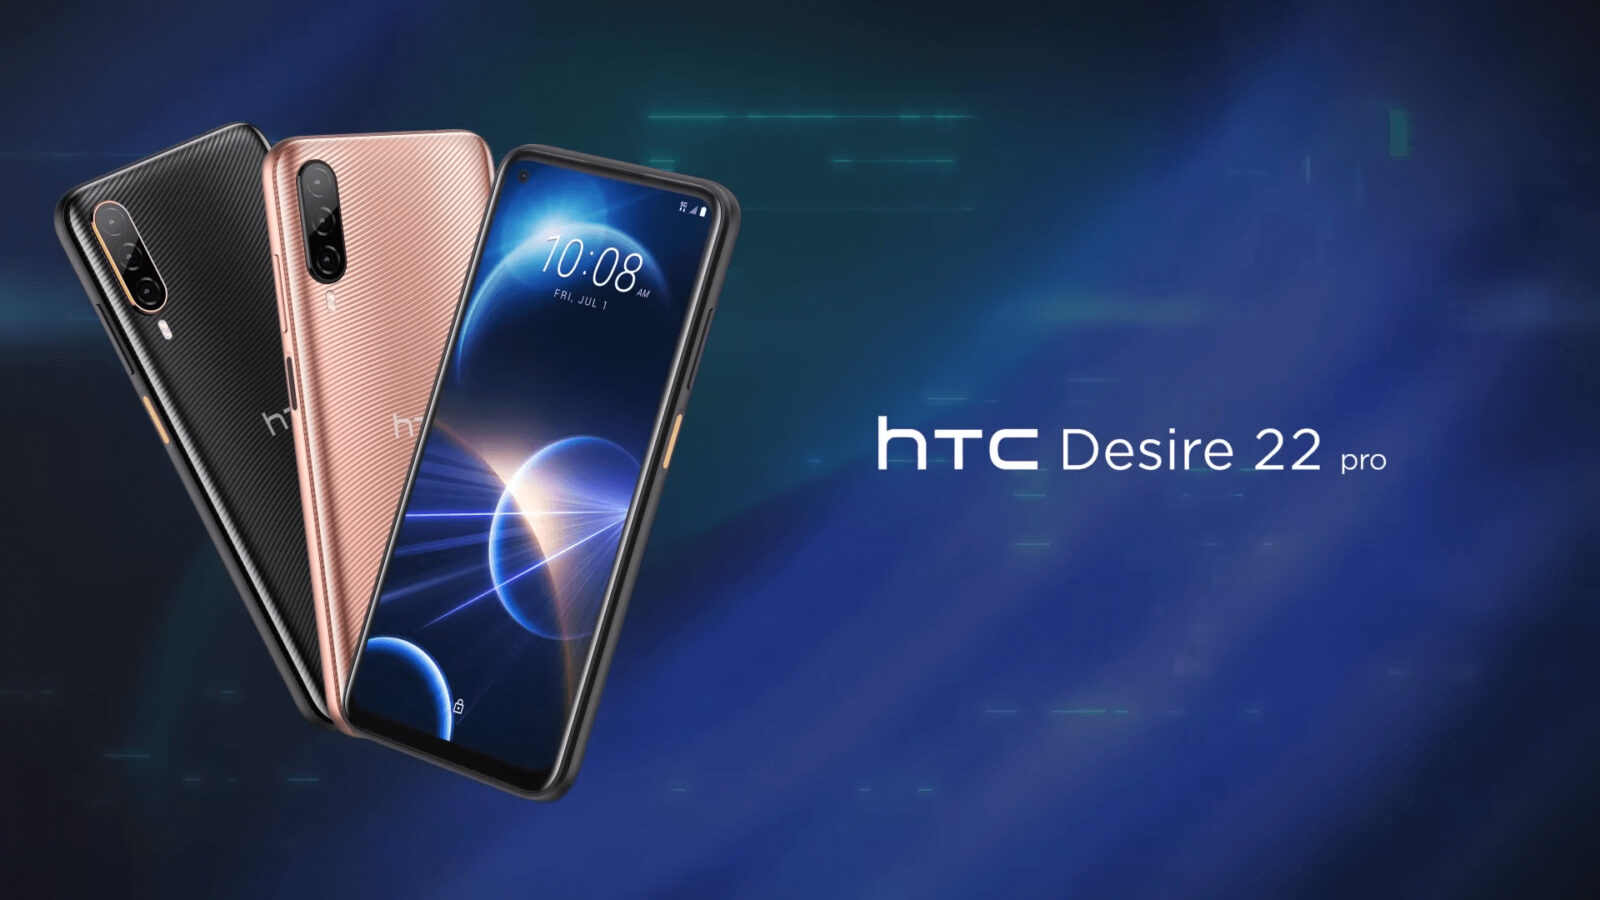 HTC Desire 22 proの特長・性能・価格・発売日・キャンペーン 